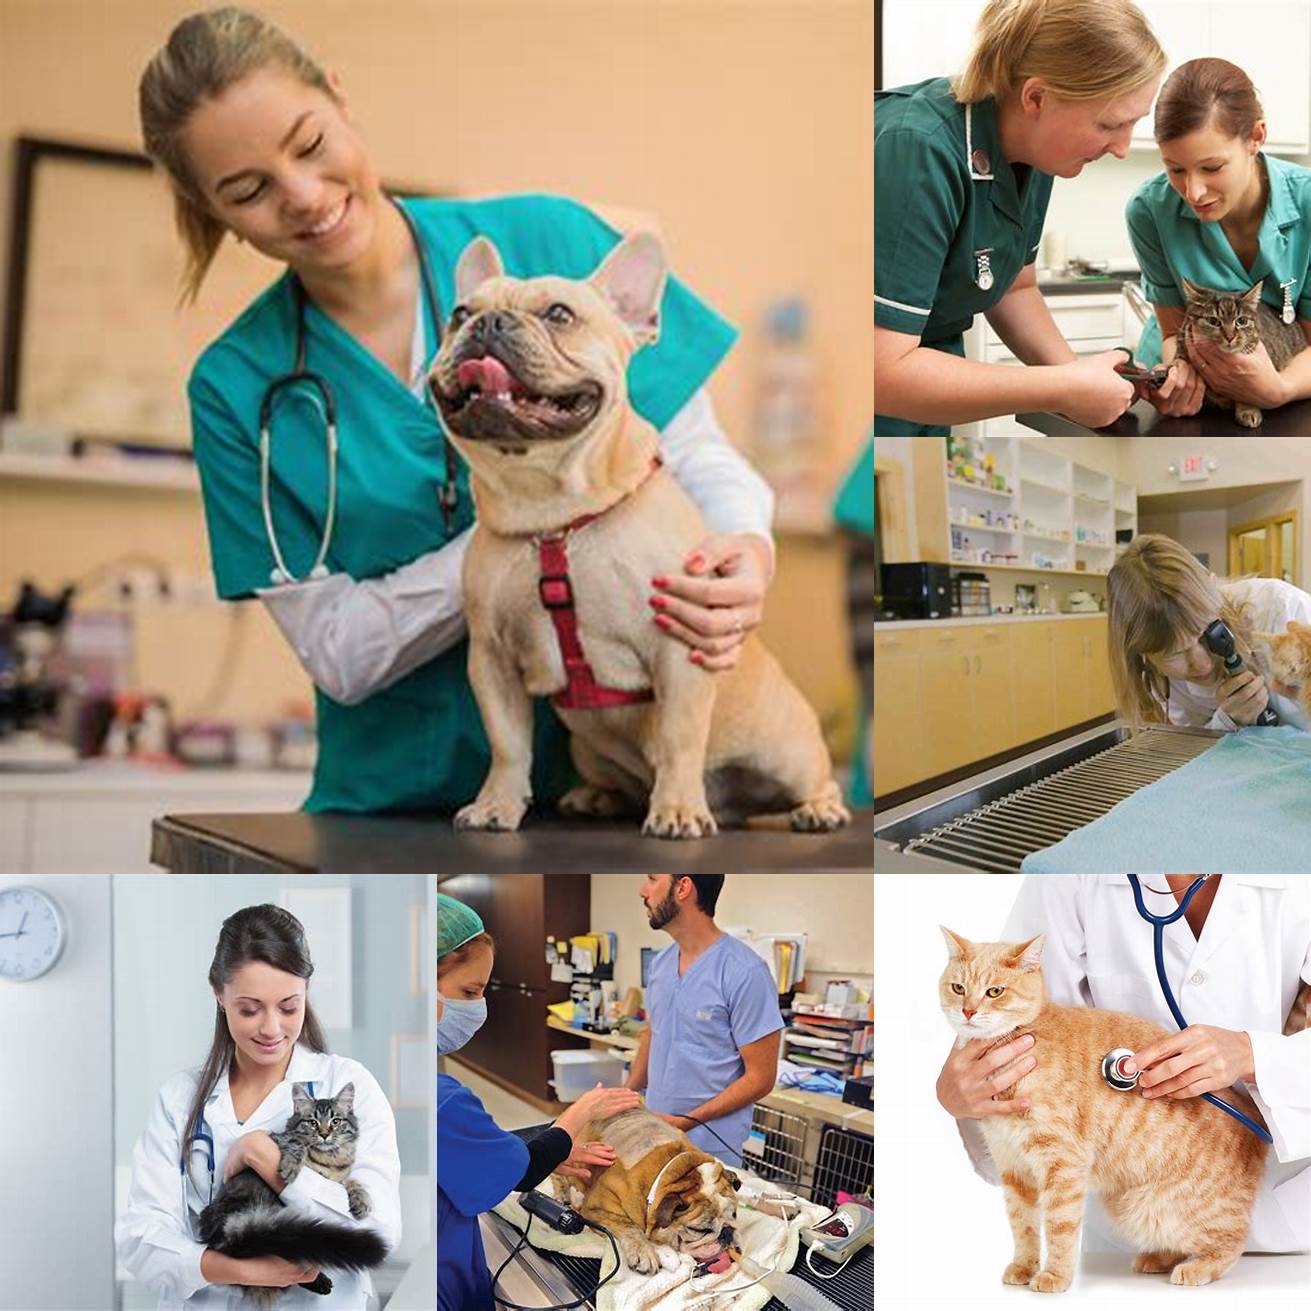 4 Seek Veterinary Care if Needed